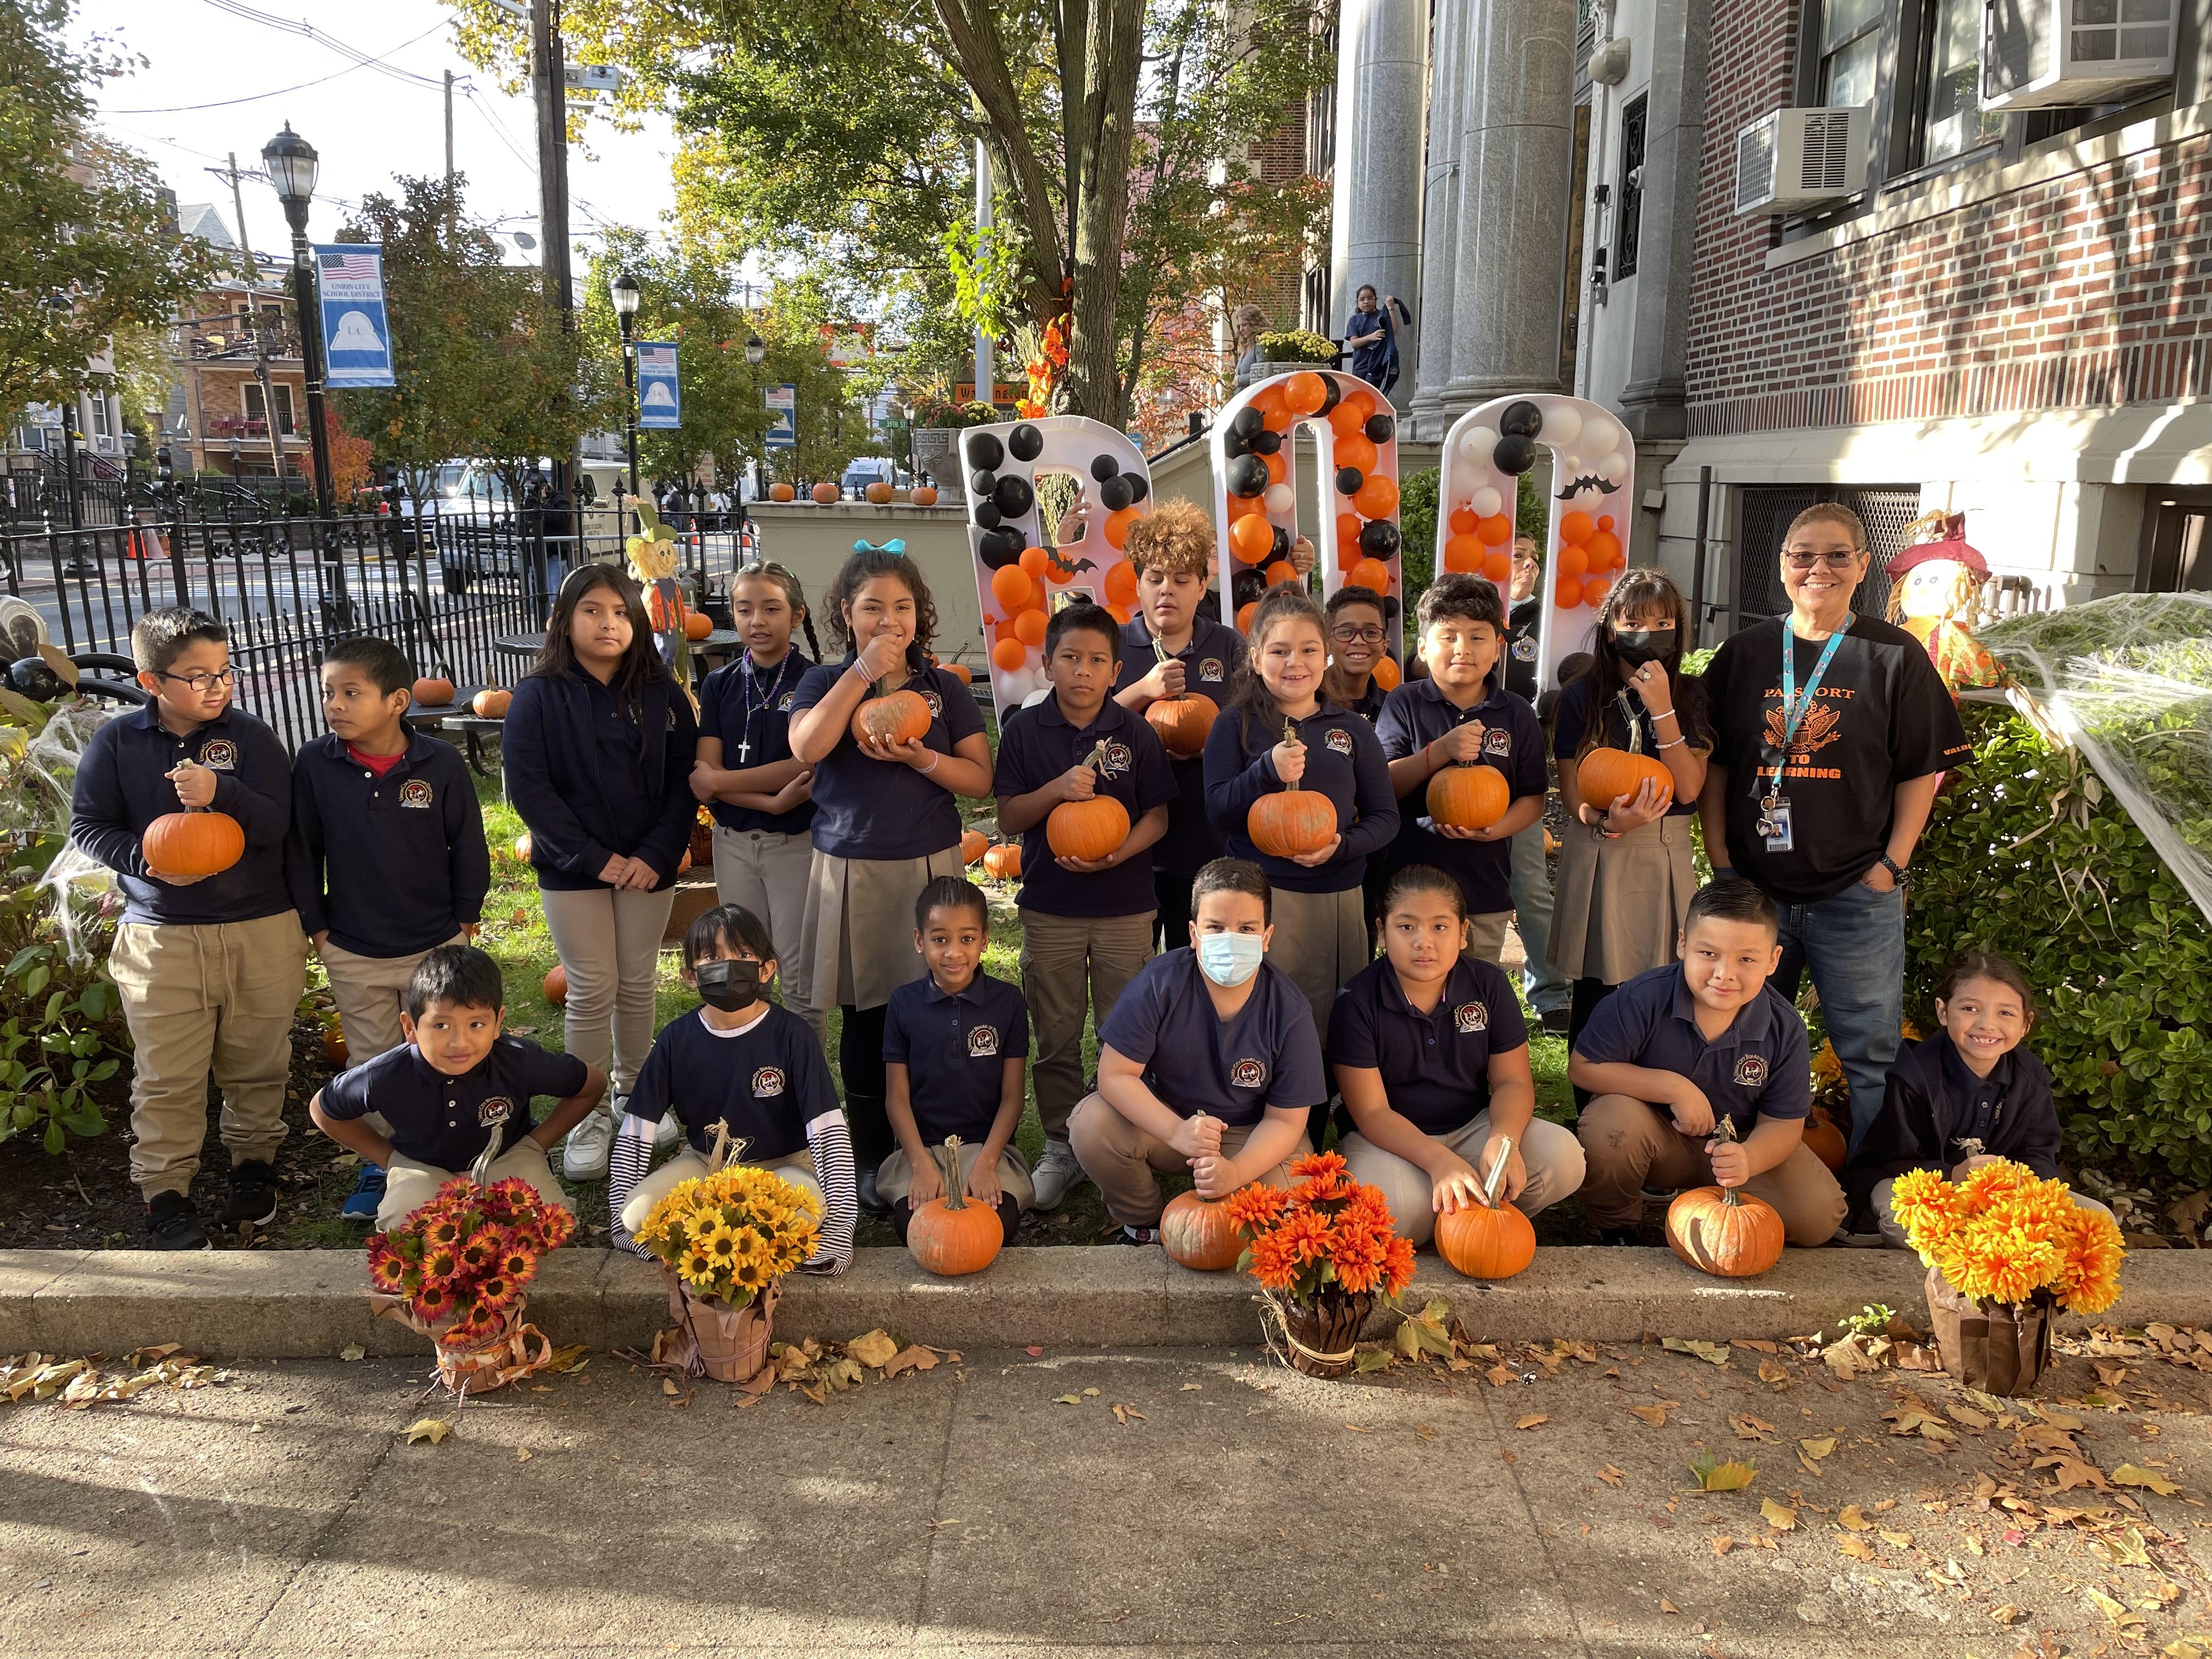 Washington School students enjoying pumpkins